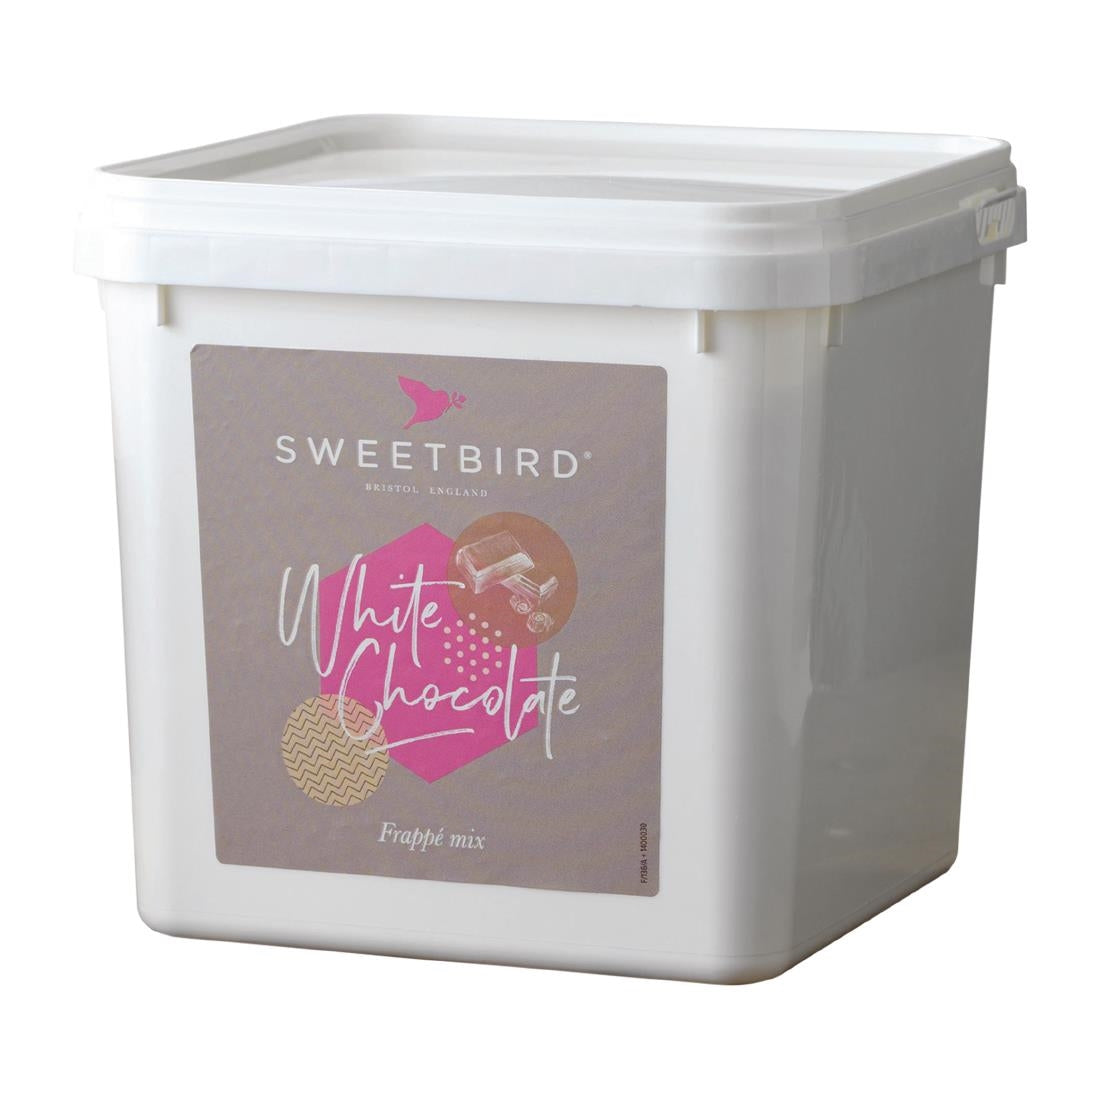 DX602 Sweetbird White Chocolate FrappÃ© Mix Tub 2kg